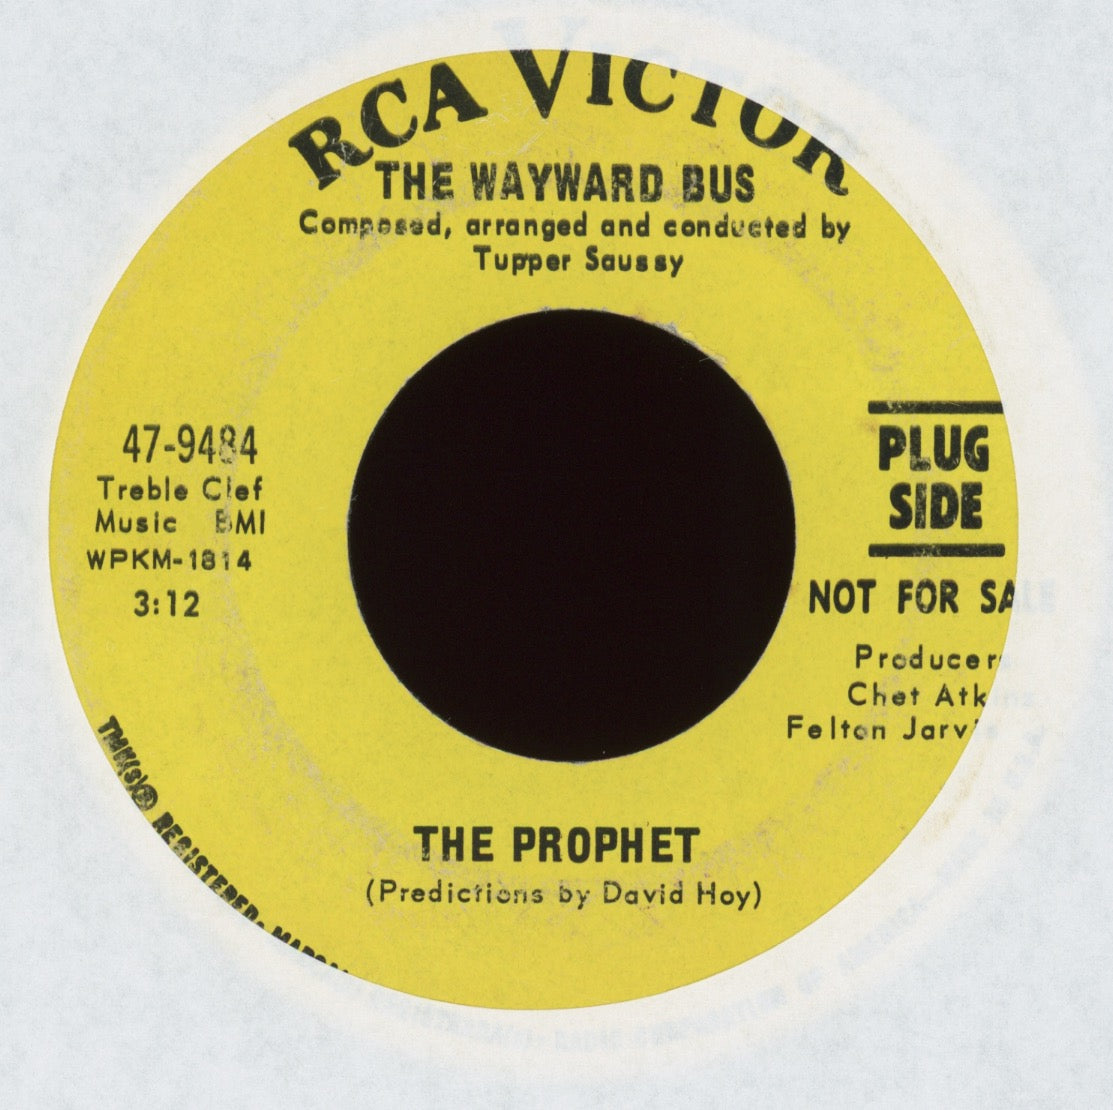 The Wayward Bus - The Prophet on RCA Promo